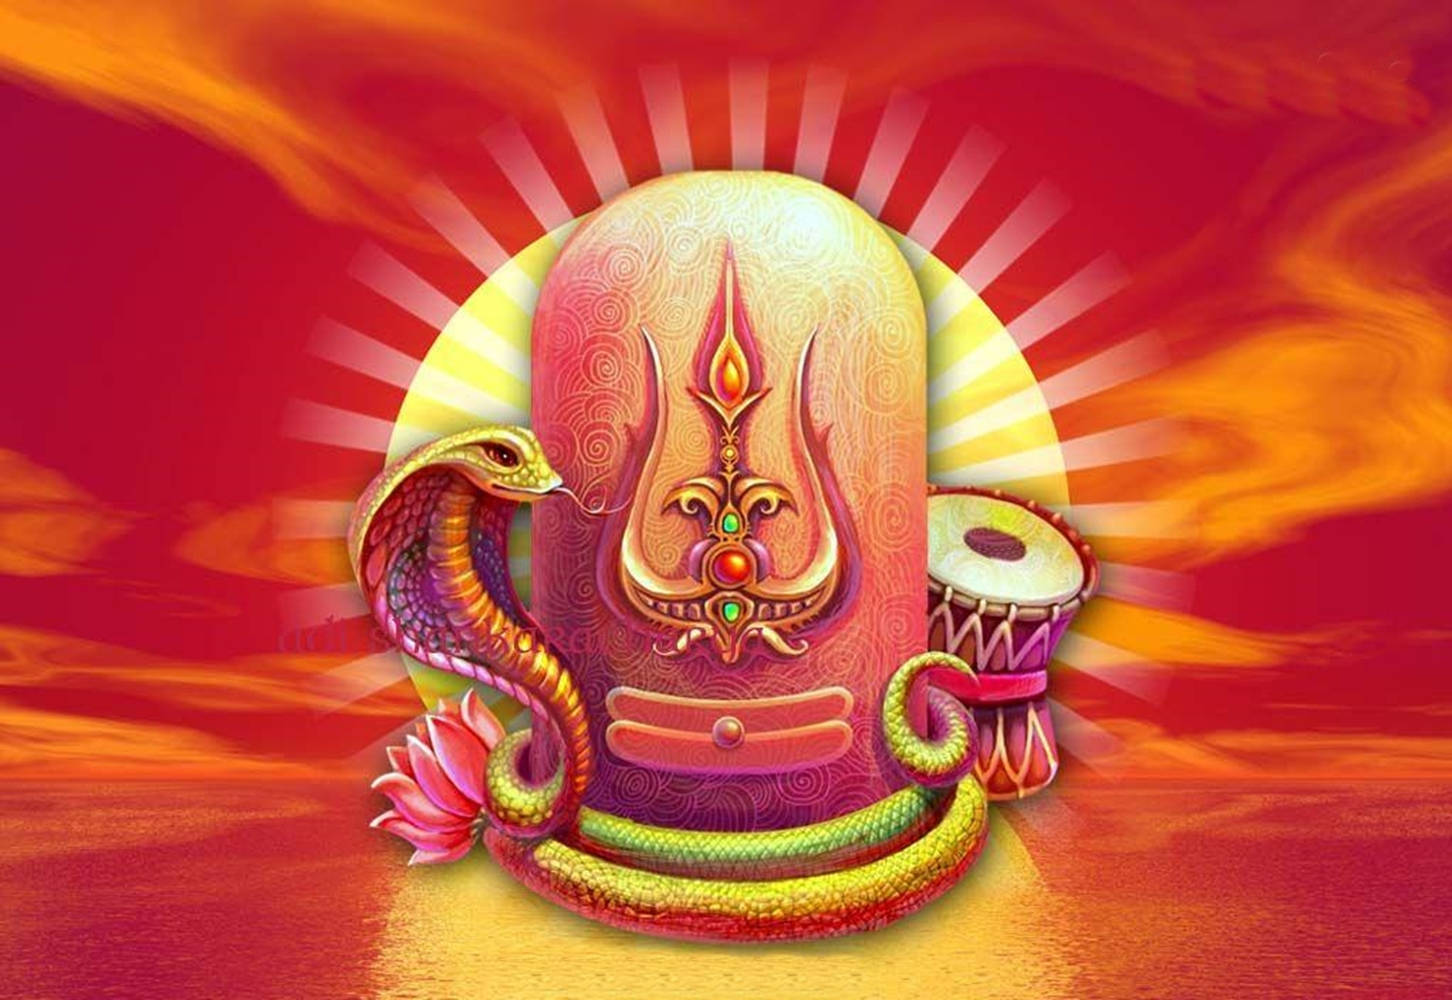 Download Red Digital Shiva Lingam Wallpaper | Wallpapers.com